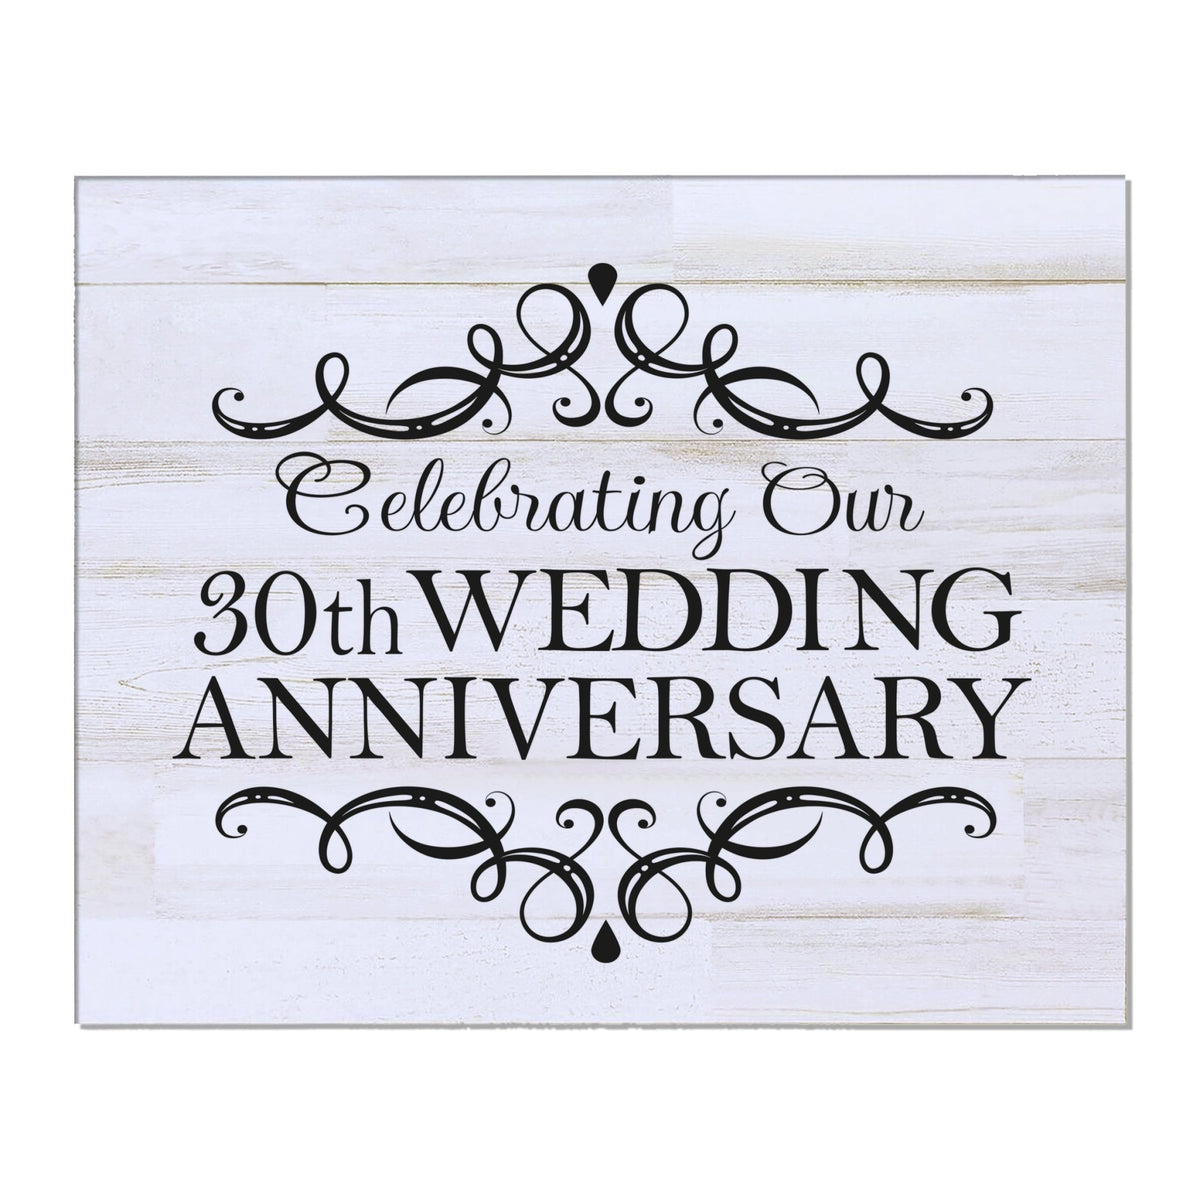 30th Wedding Anniversary Wall Plaque - Celebrating - LifeSong Milestones